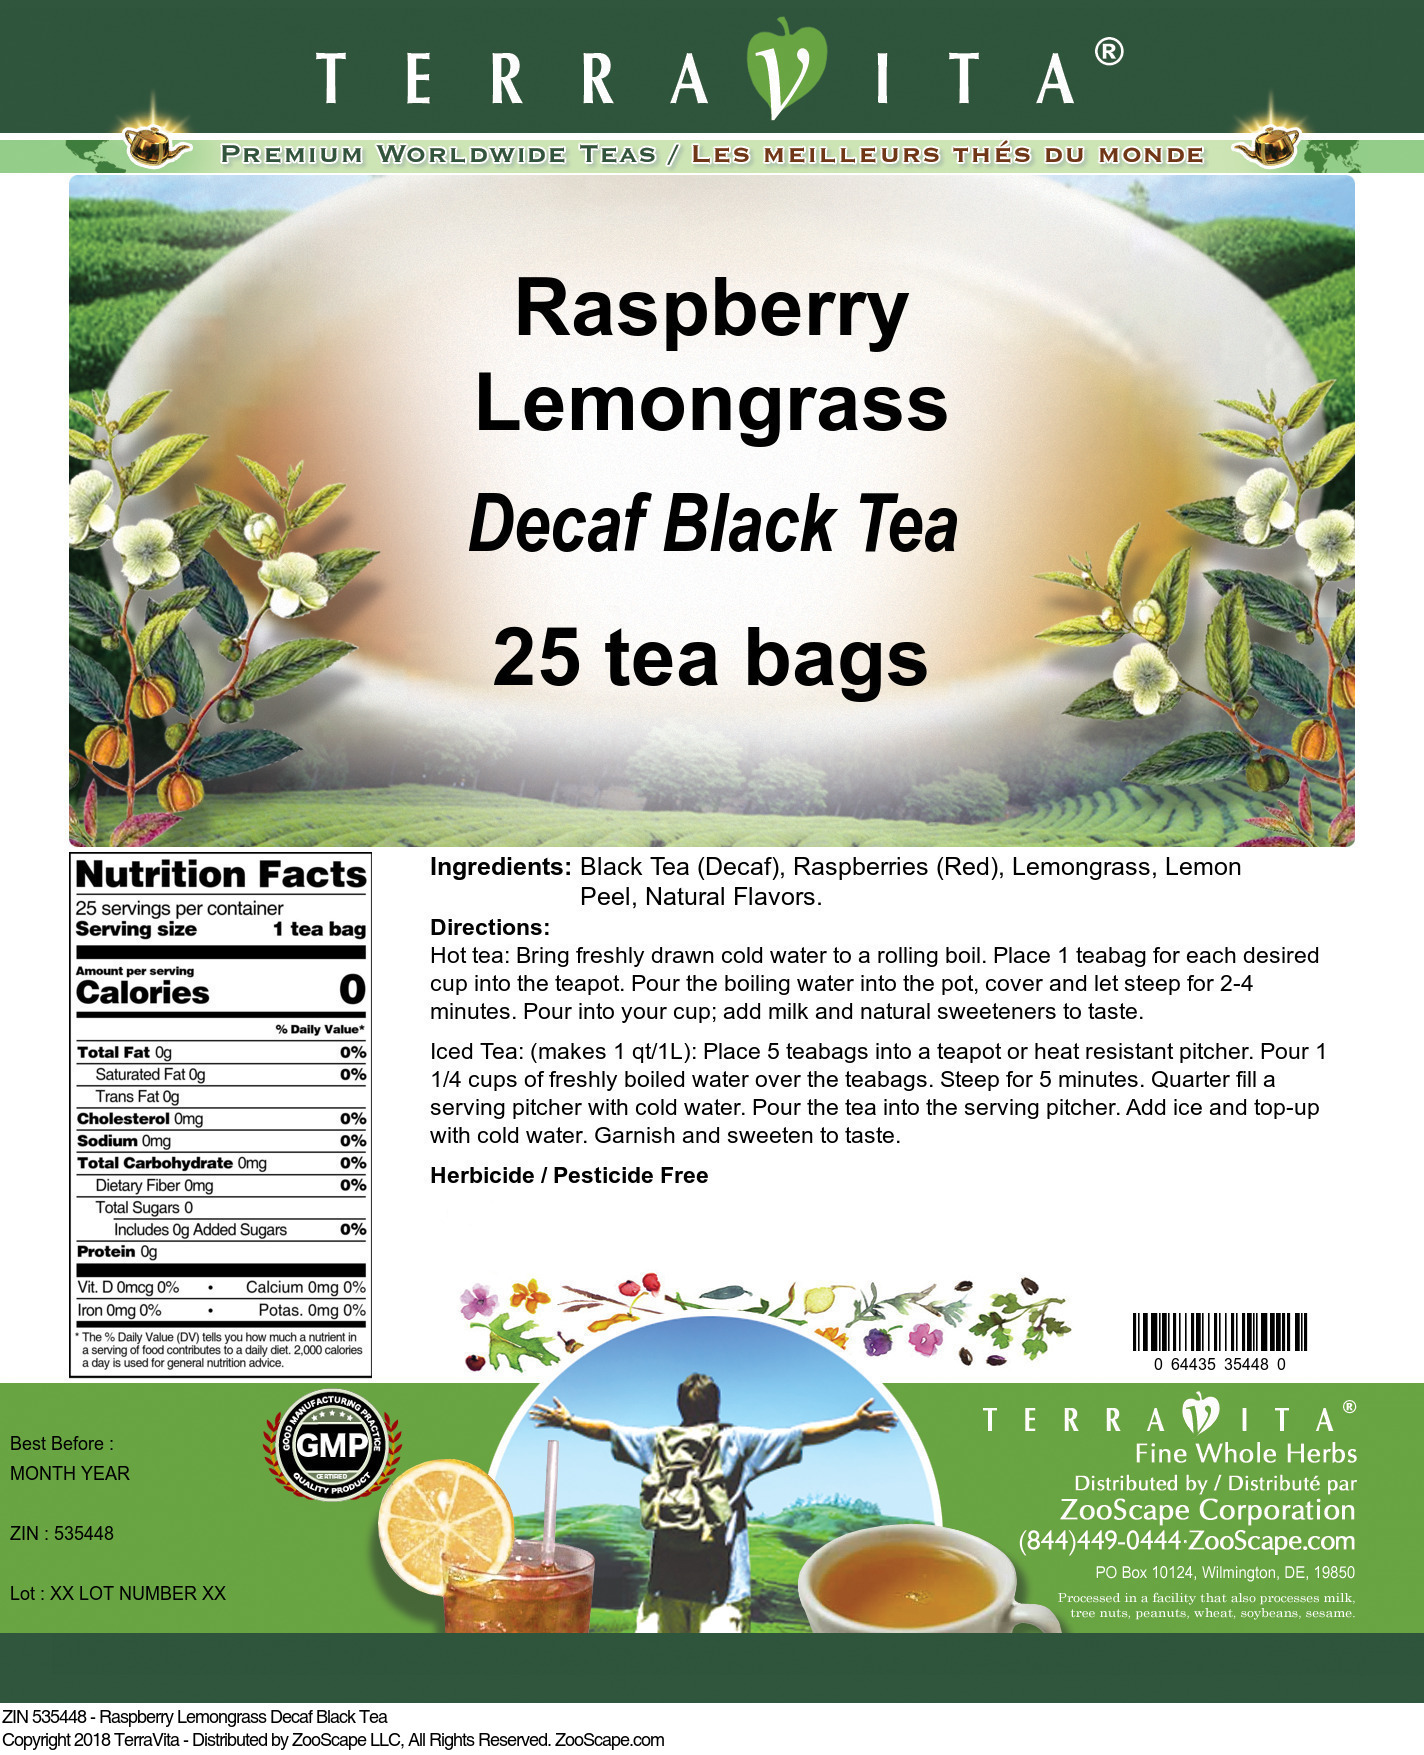 Raspberry Lemongrass Decaf Black Tea - Label